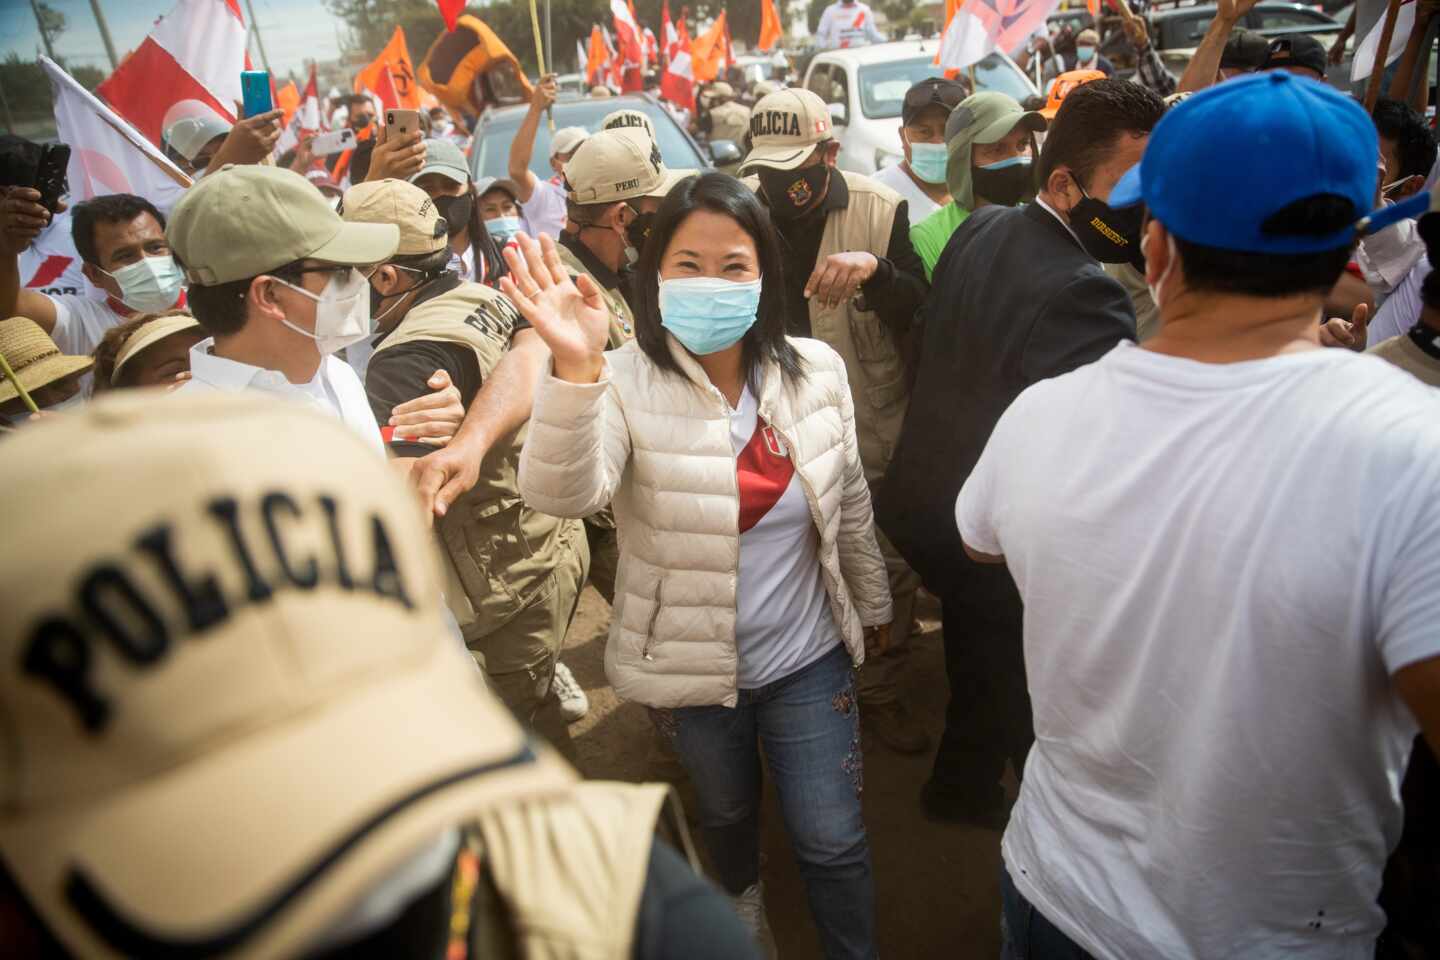 La candidata presidencial peruana Keiko Fujimori